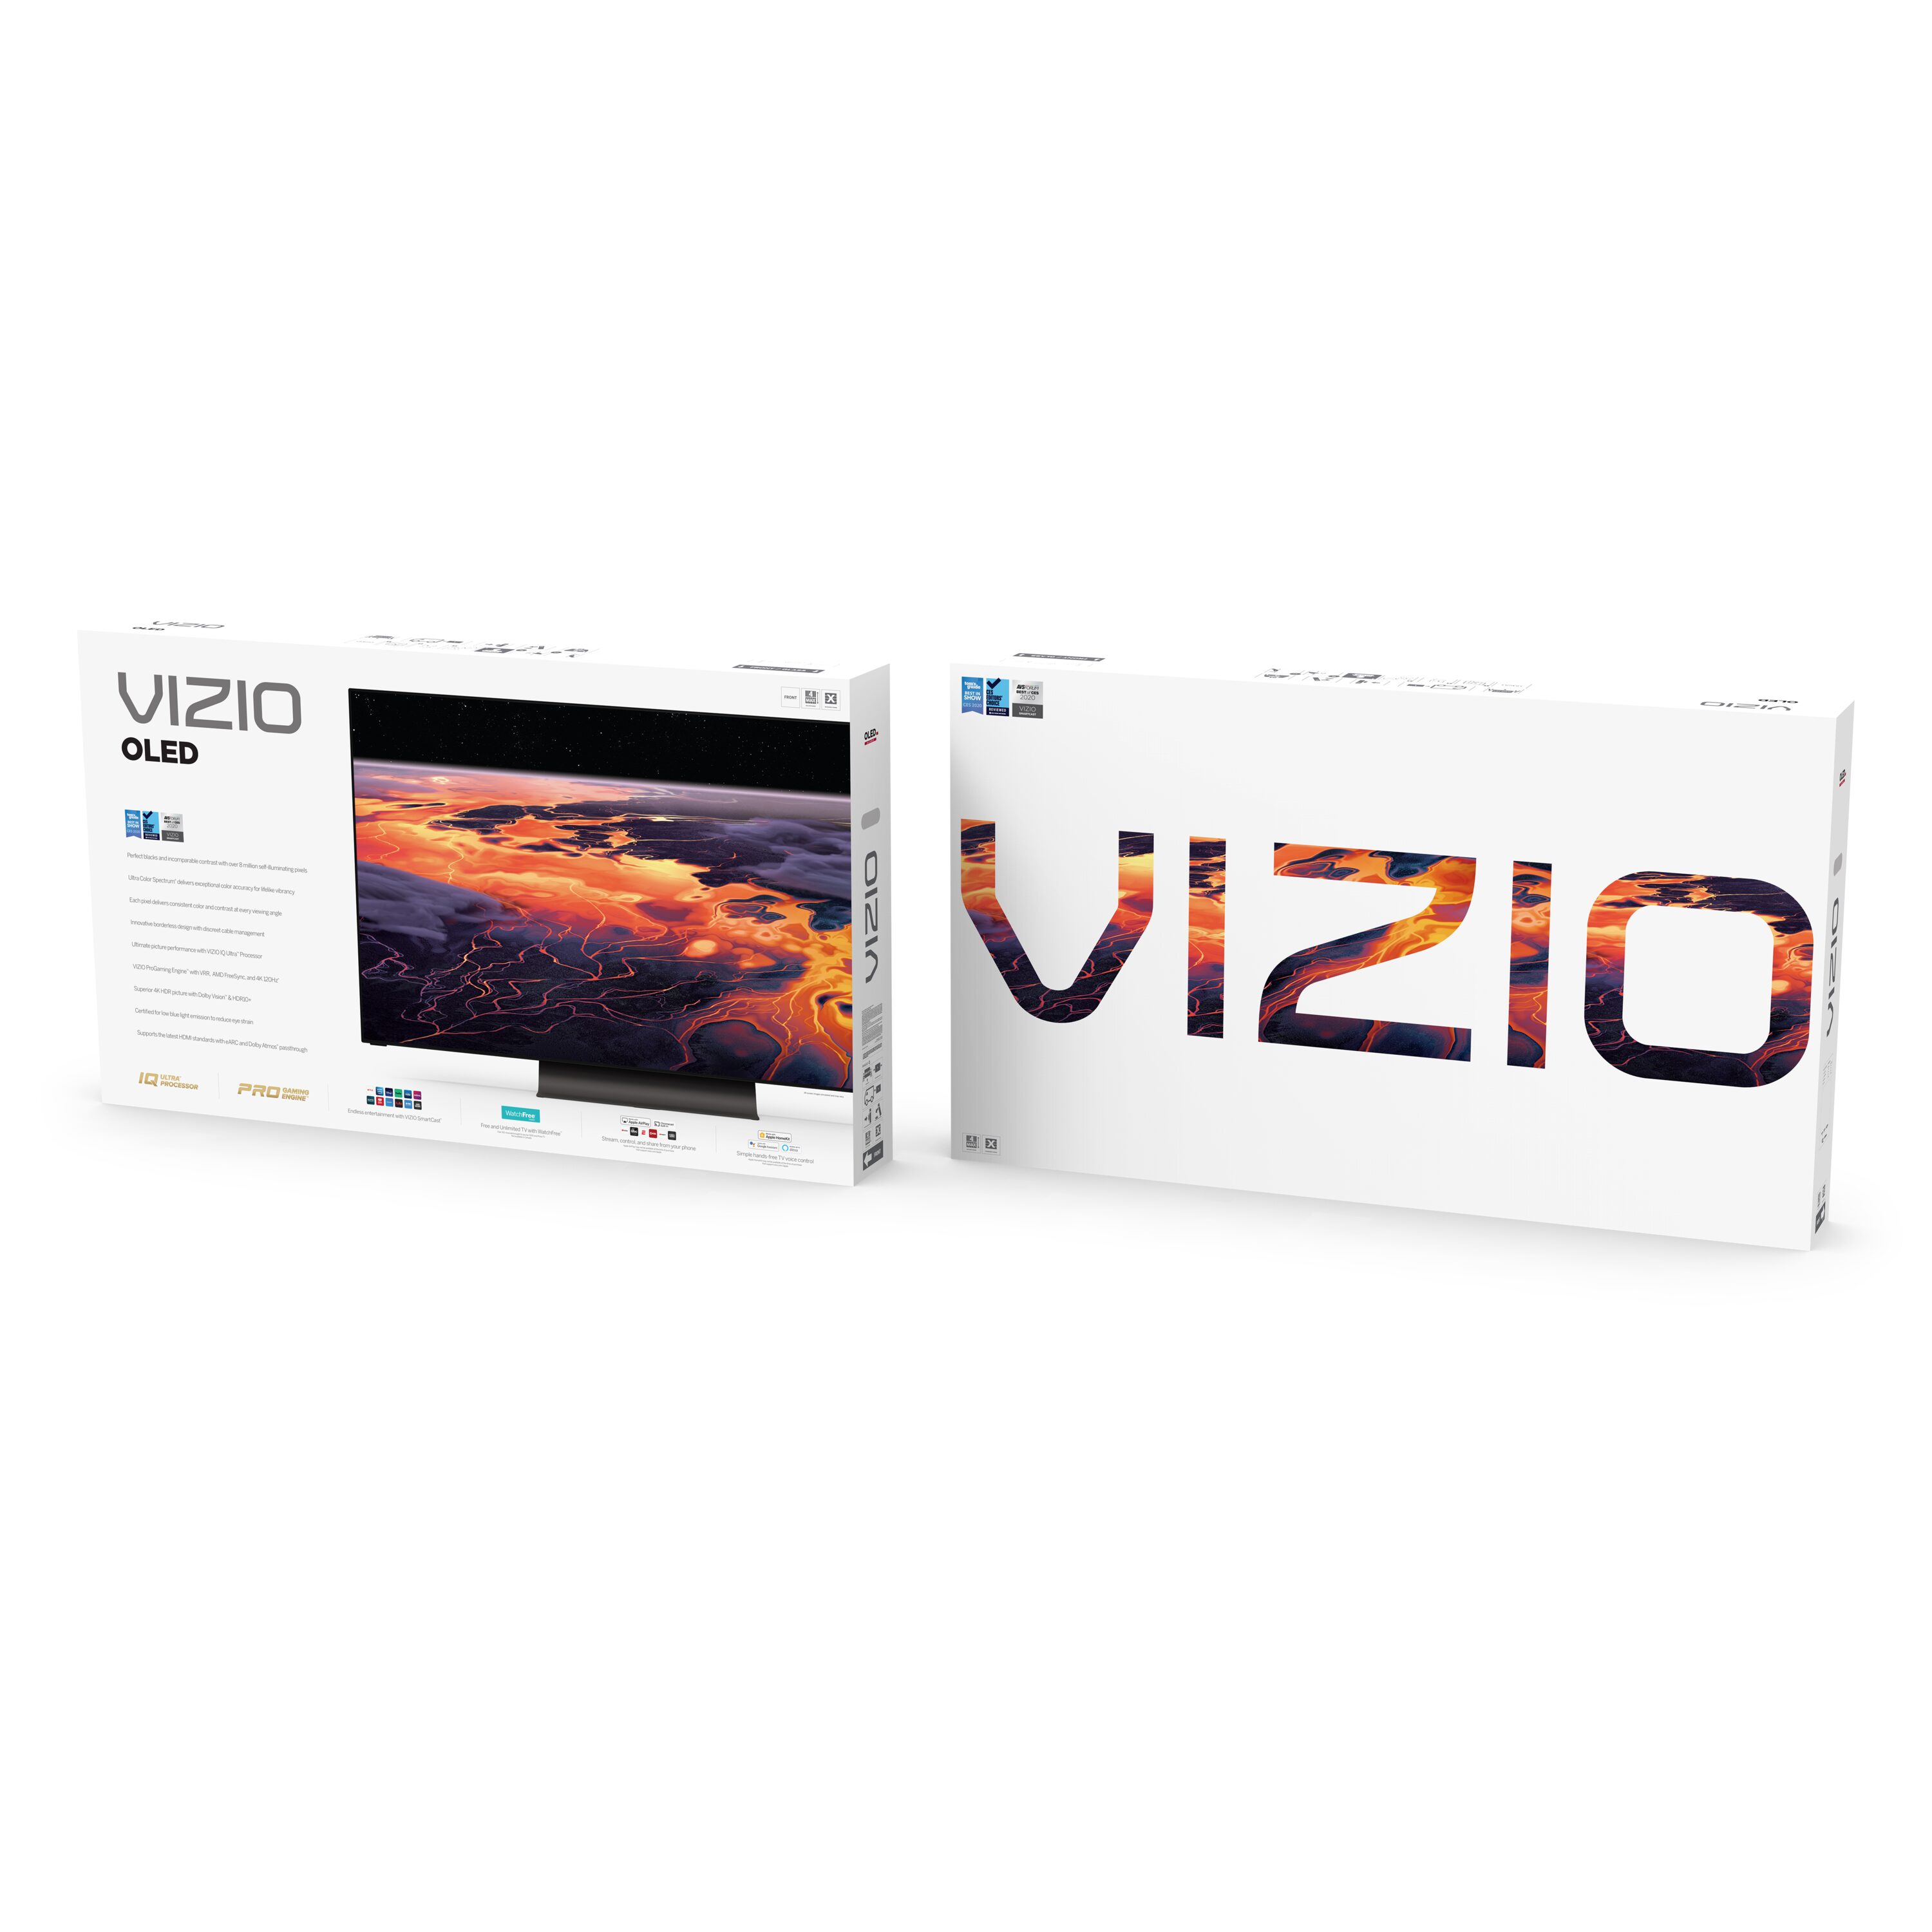 VIZIO OLED 65" Class 4K HDR SmartCast Smart TV OLED65-H1 - image 22 of 23